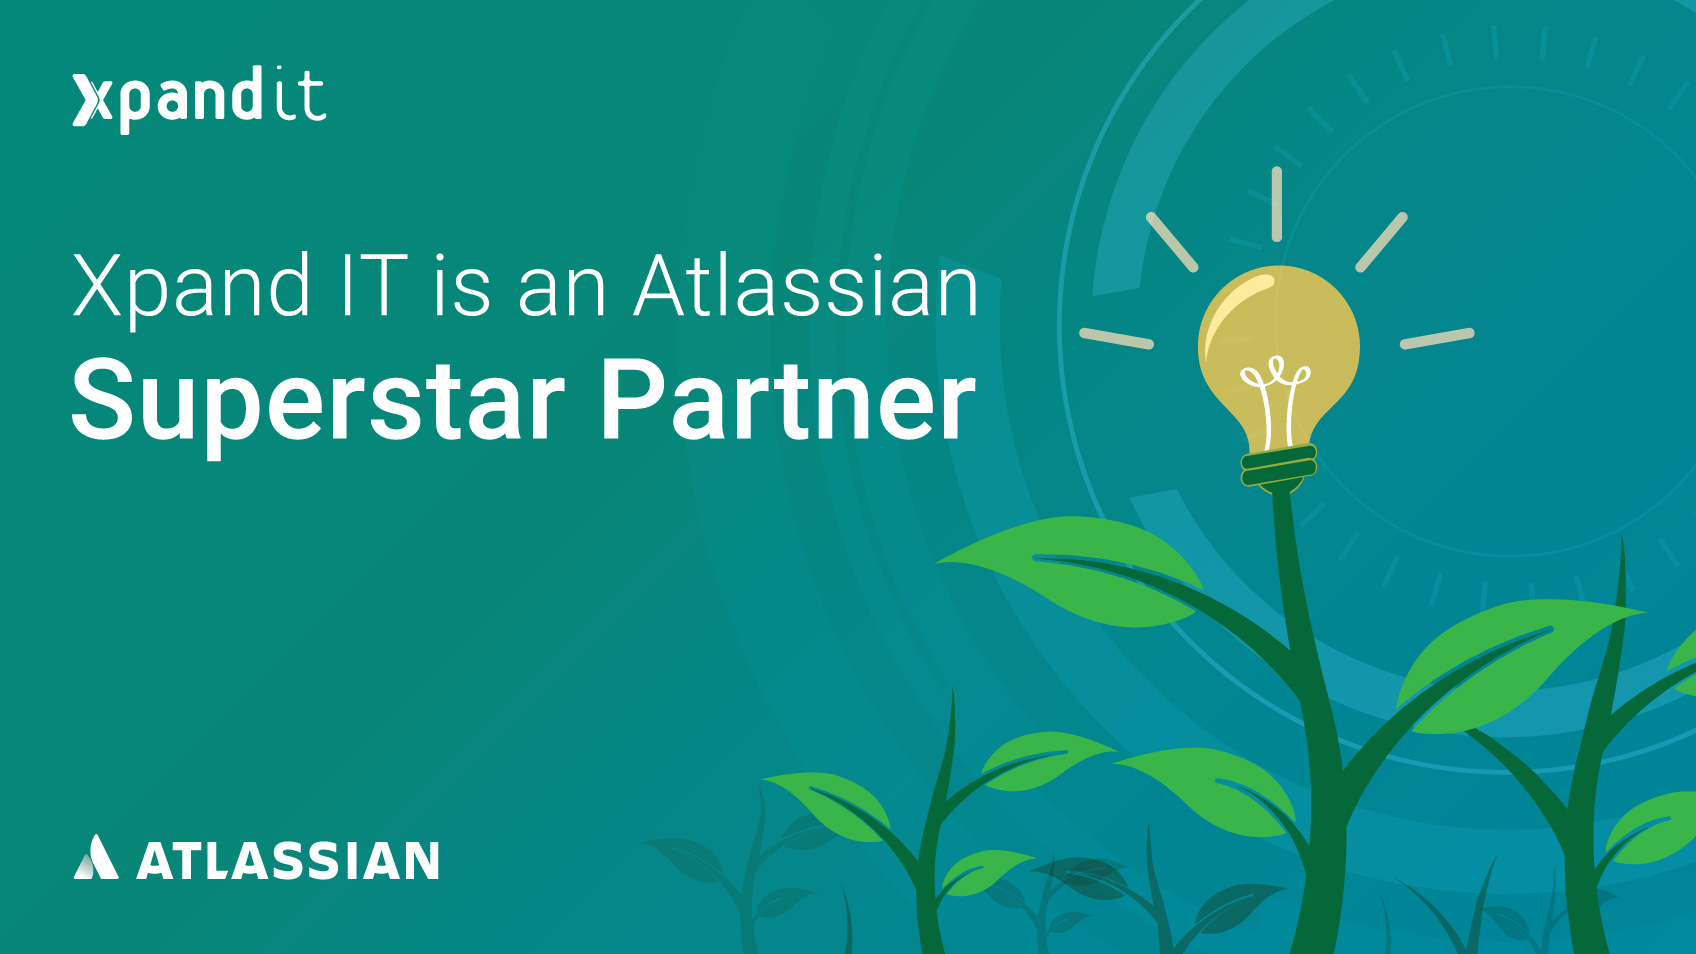 Atlassian Shareholder Letter – Xpand IT distinguished as a “superstar partner”